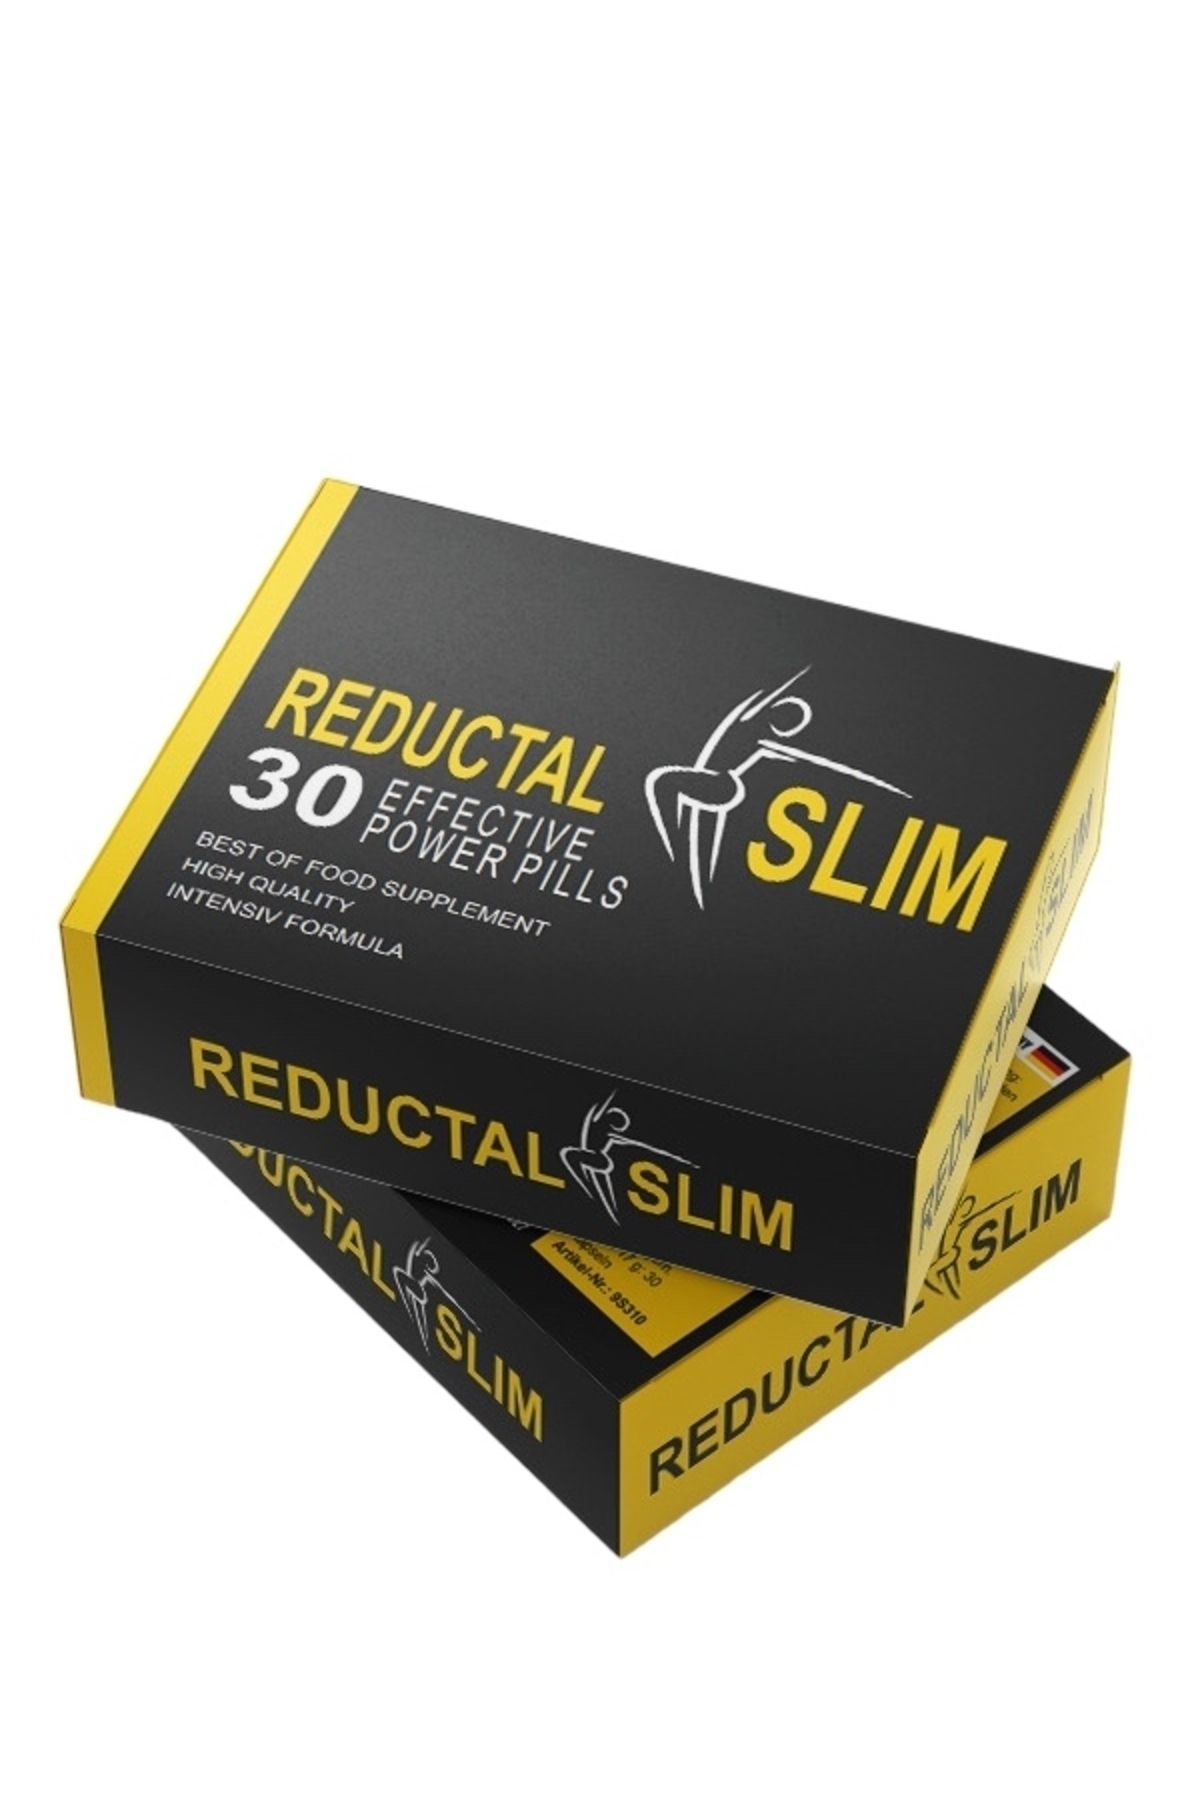 mcanabolic Reductal Slim 30 Capsul Germany (istah kesici) Fat Burner